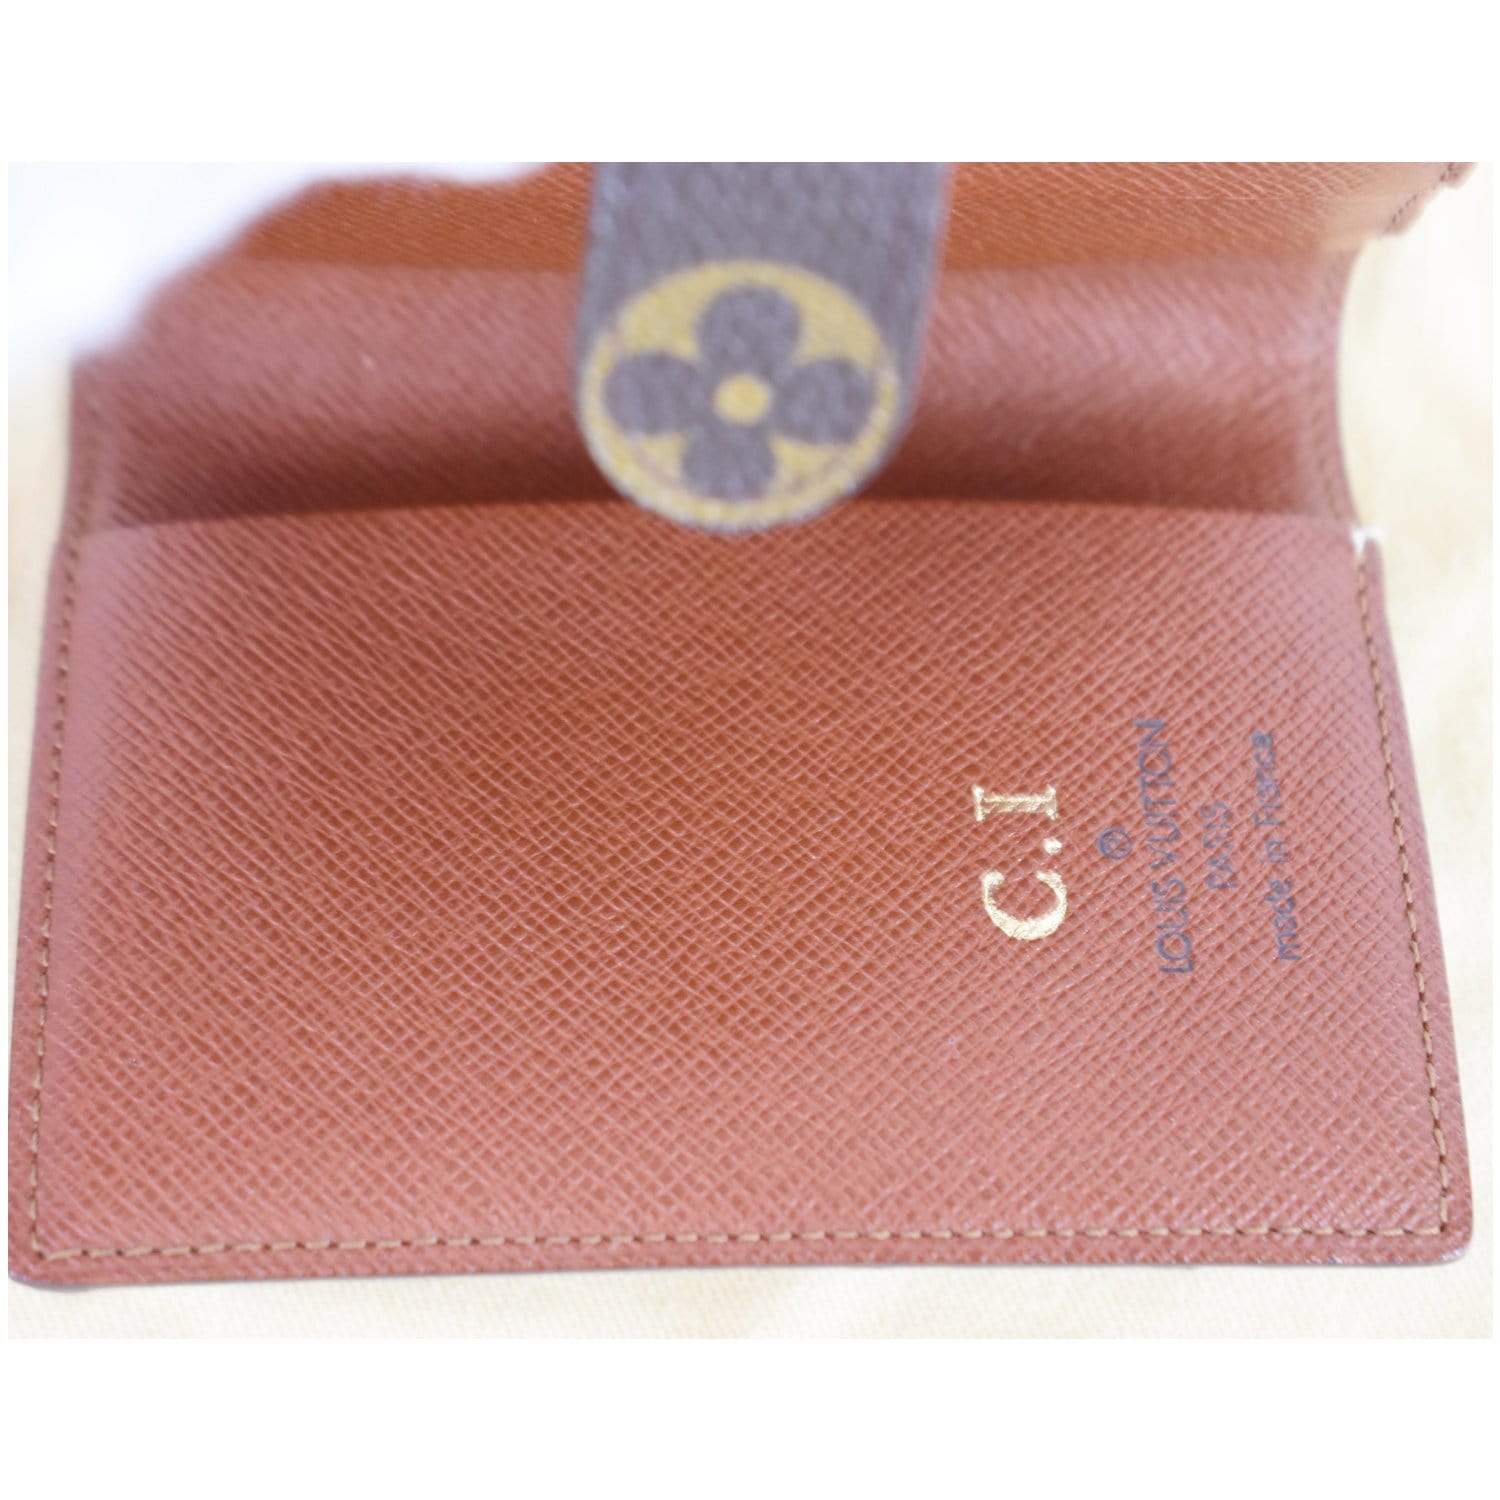 Authentic Louis Vuitton Monogram Agenda MM Notebook Cover R20004 LV 2511F